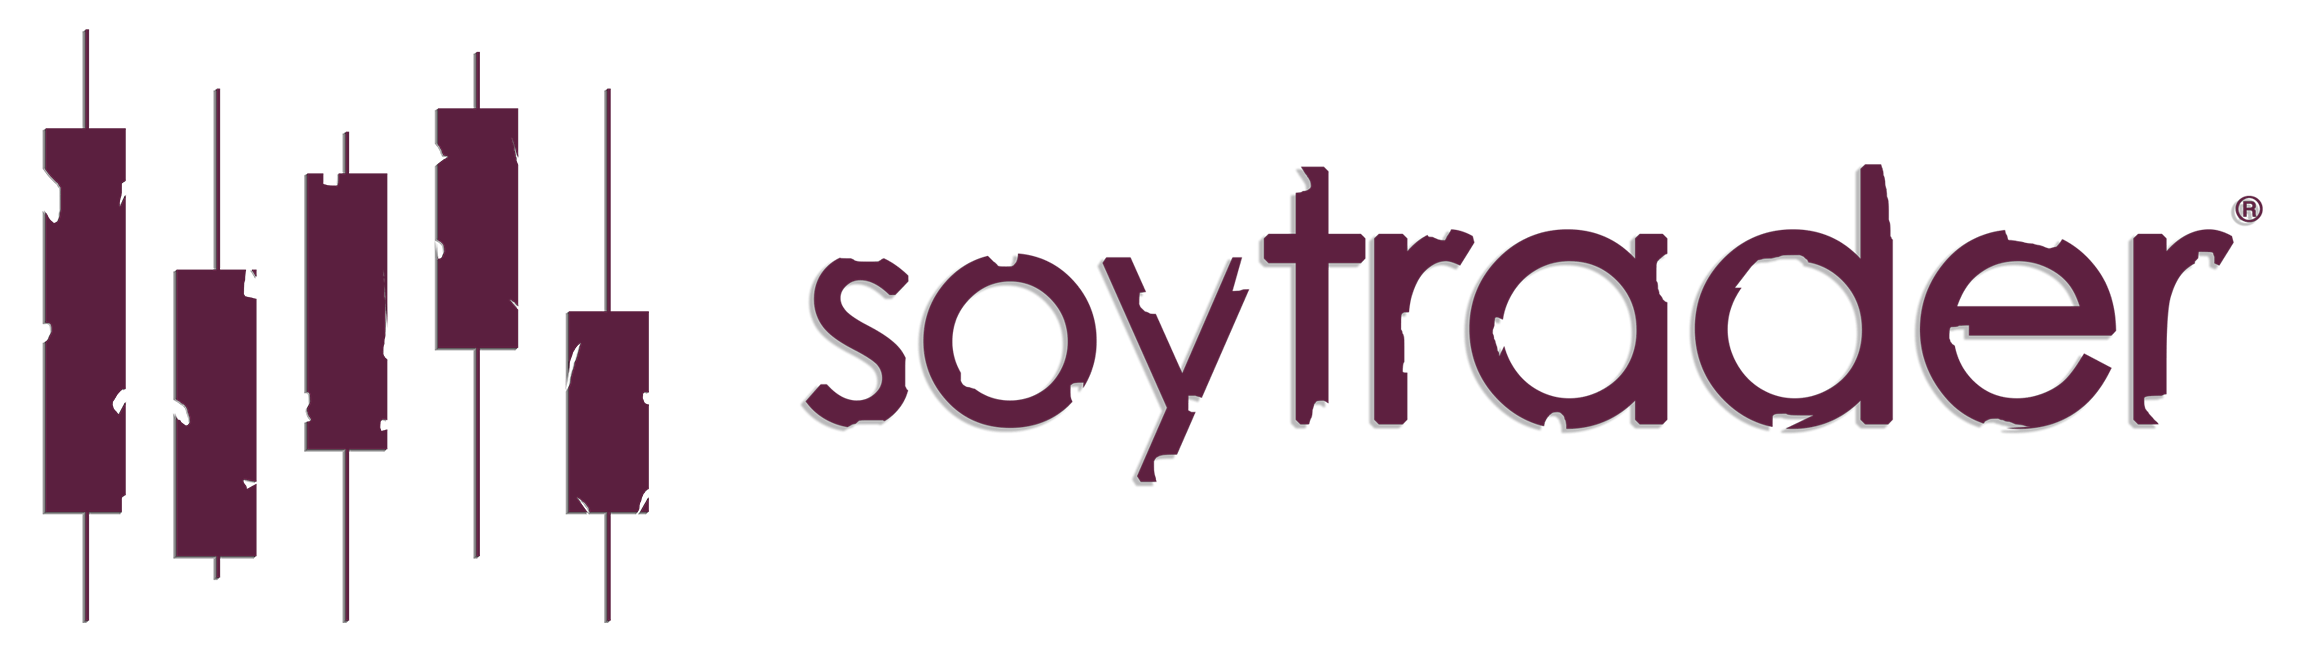 soytrader logo horizontal